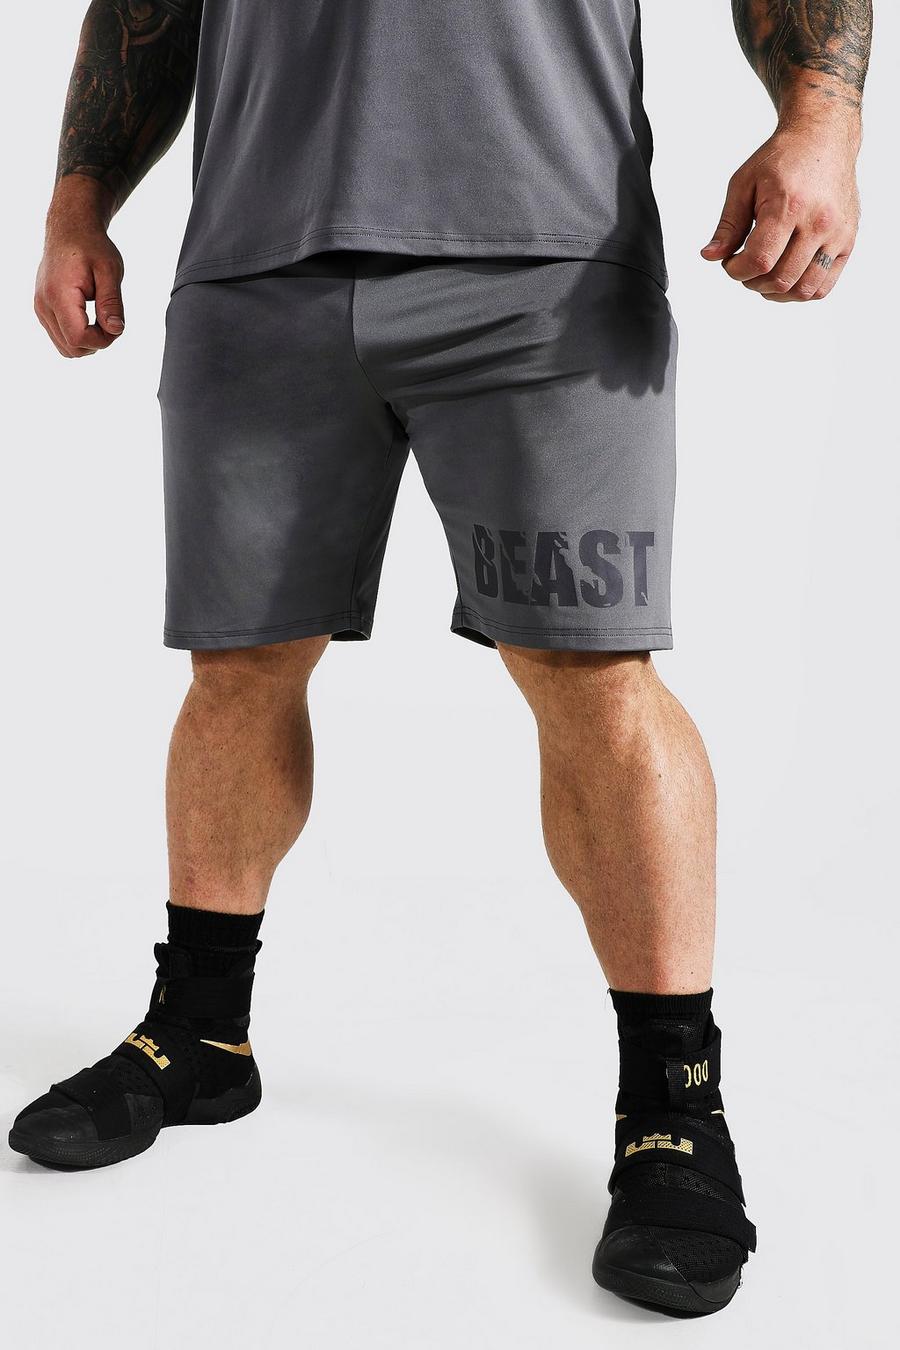 Pantaloncini Man Active x Beast per alta performance, Charcoal gris image number 1